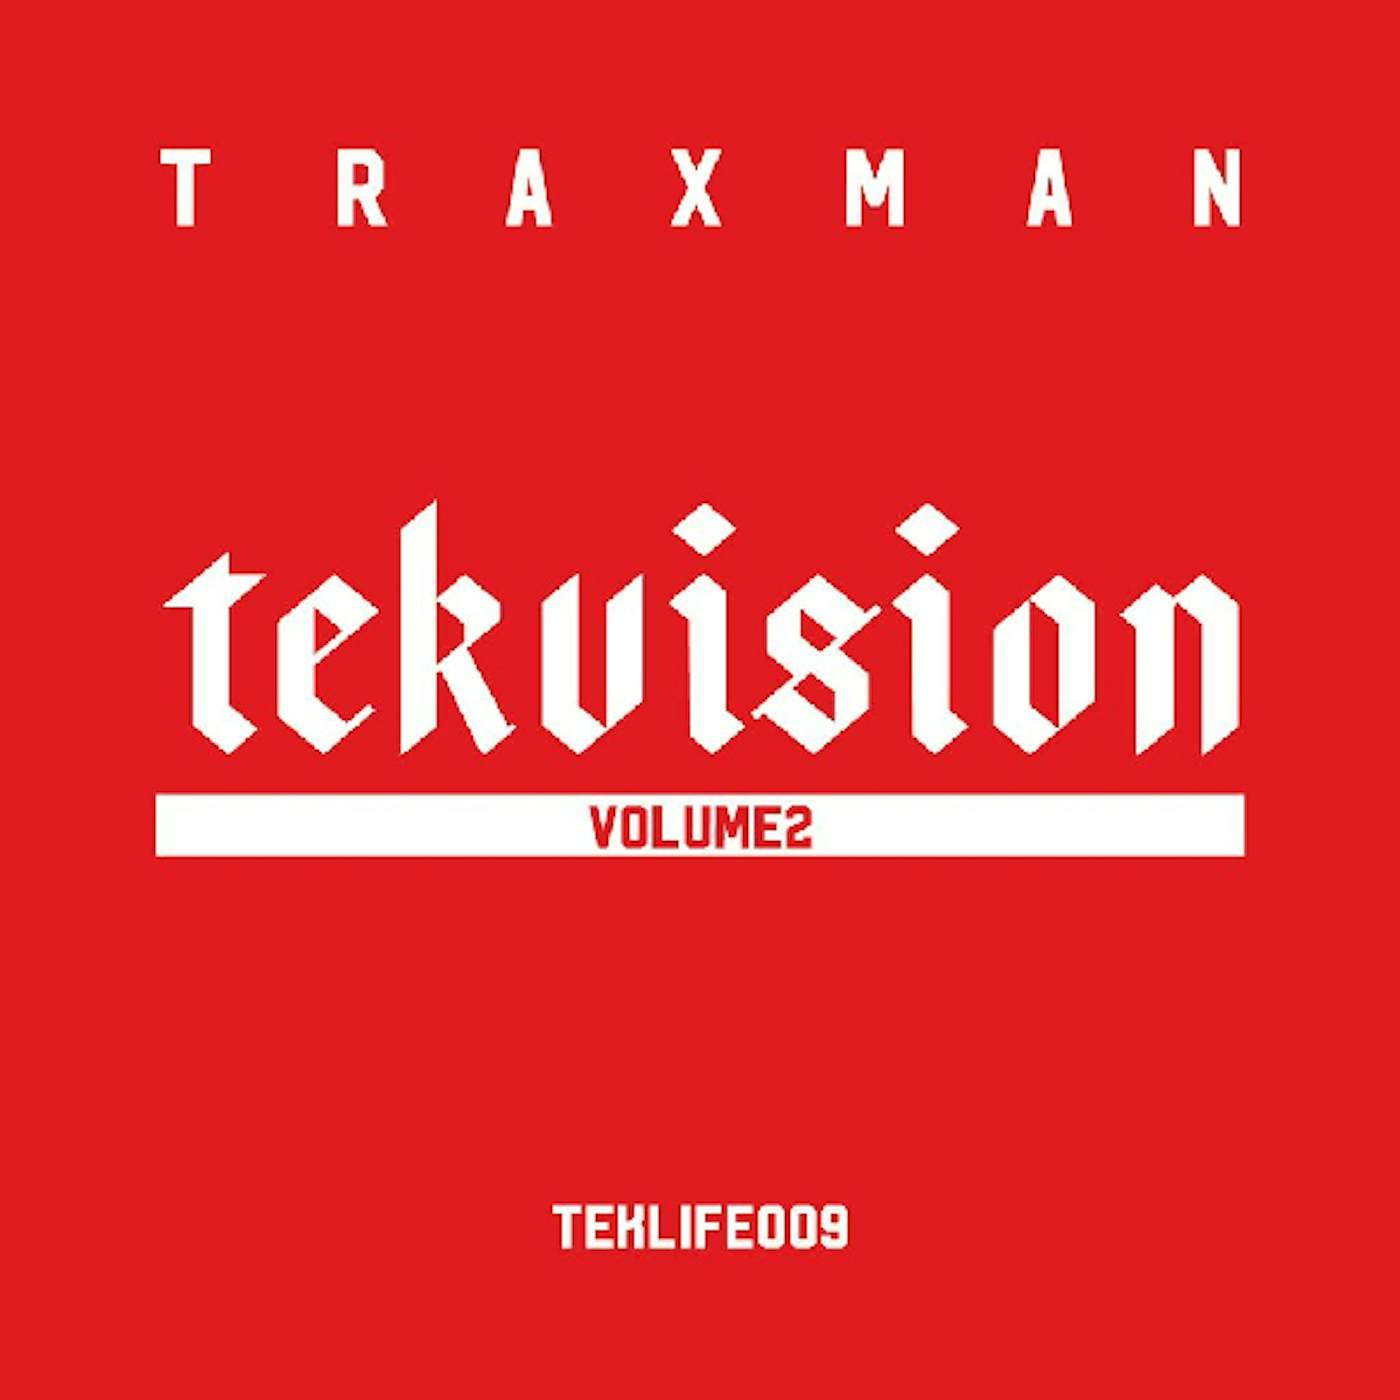 Traxman TEKVISION VOLUME 2 Vinyl Record